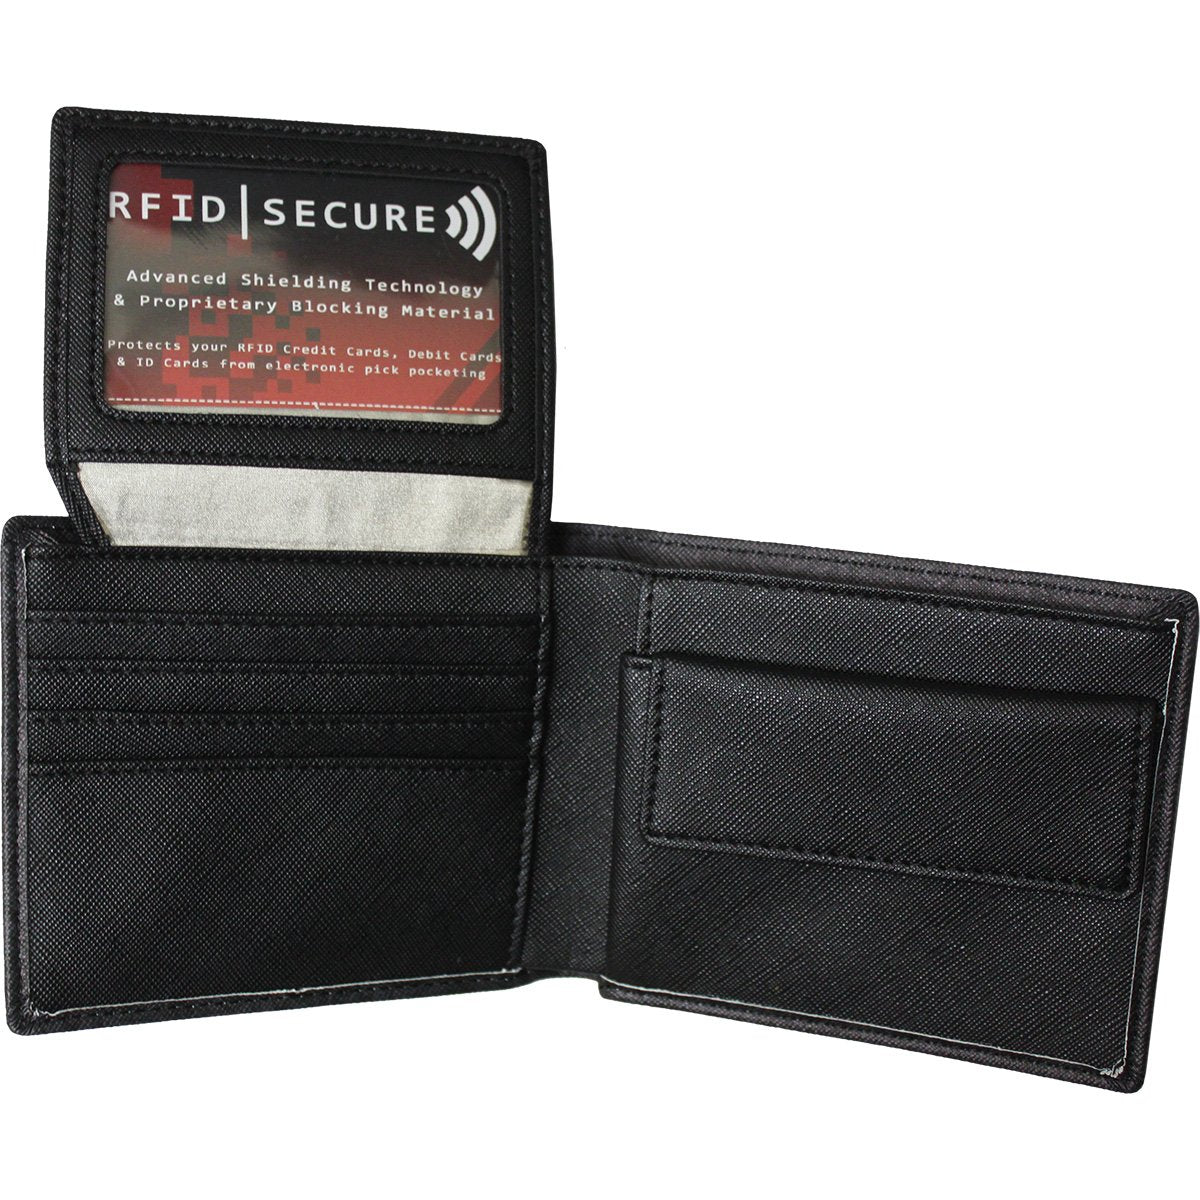 SKULL SCROLL - Portefeuille BiFold avec blocage RFID et boîte cadeau